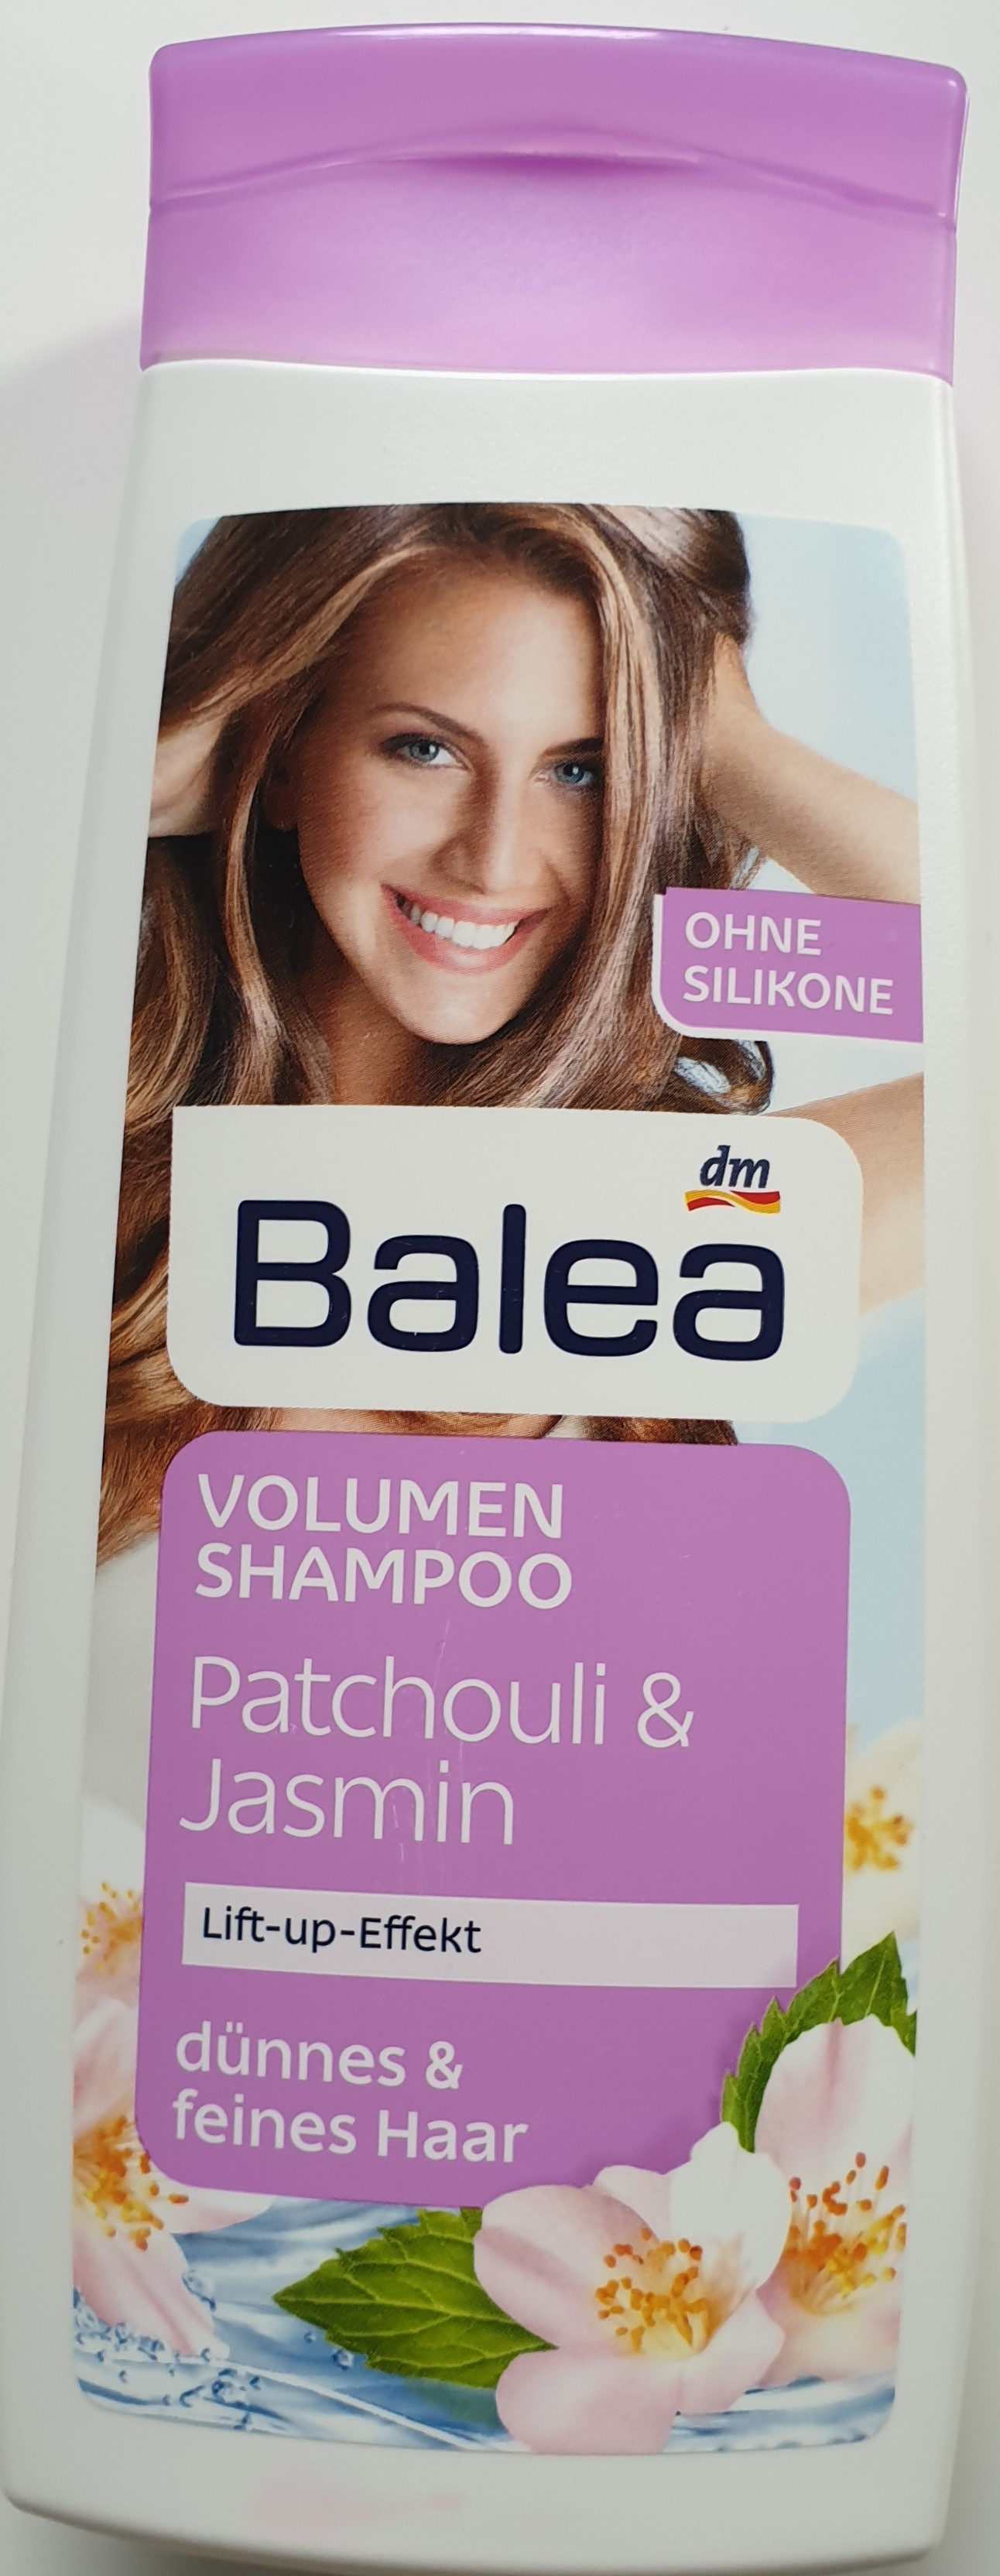 Volumen Shampoo Patchouli & Jasmin - Produkt - de